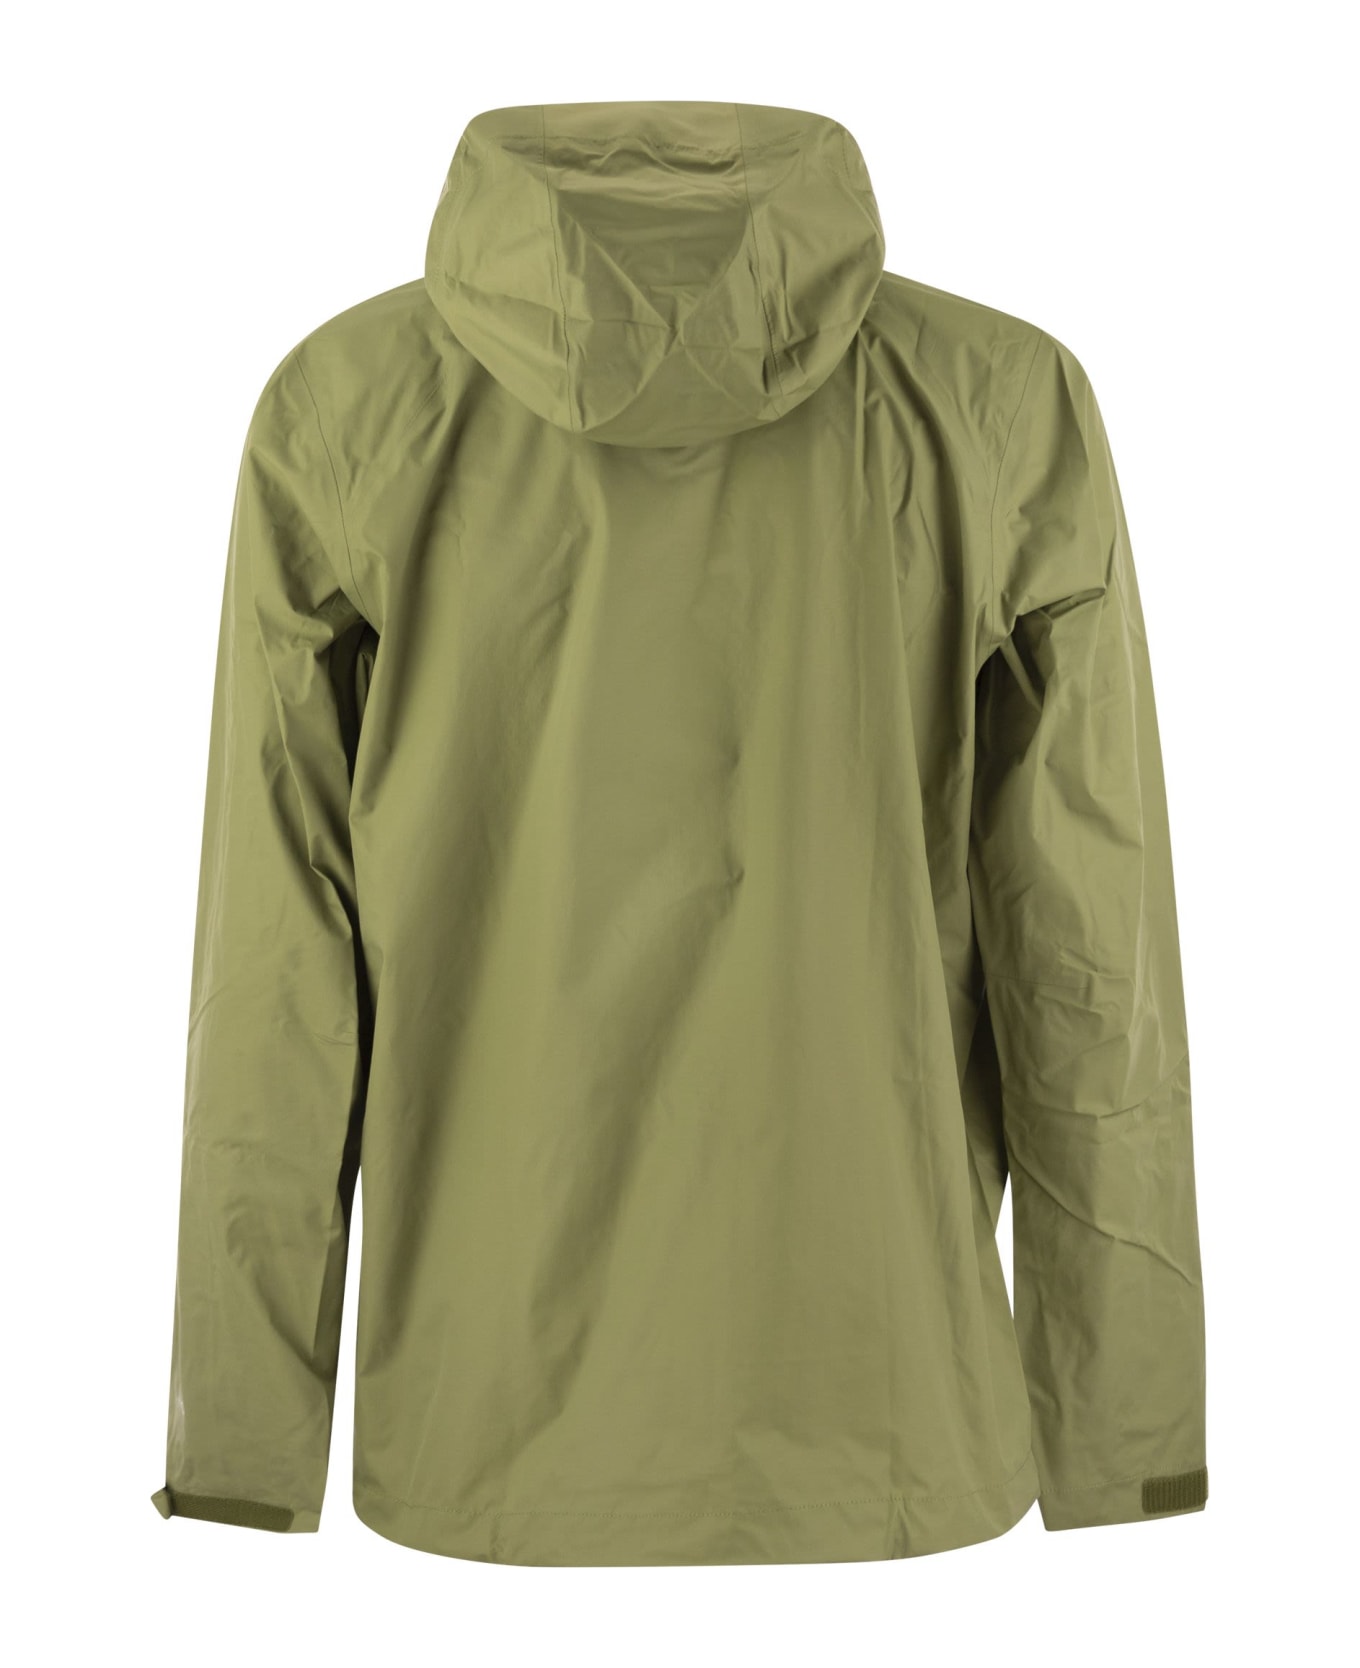 Patagonia Nylon Rainproof Jacket - Bugr